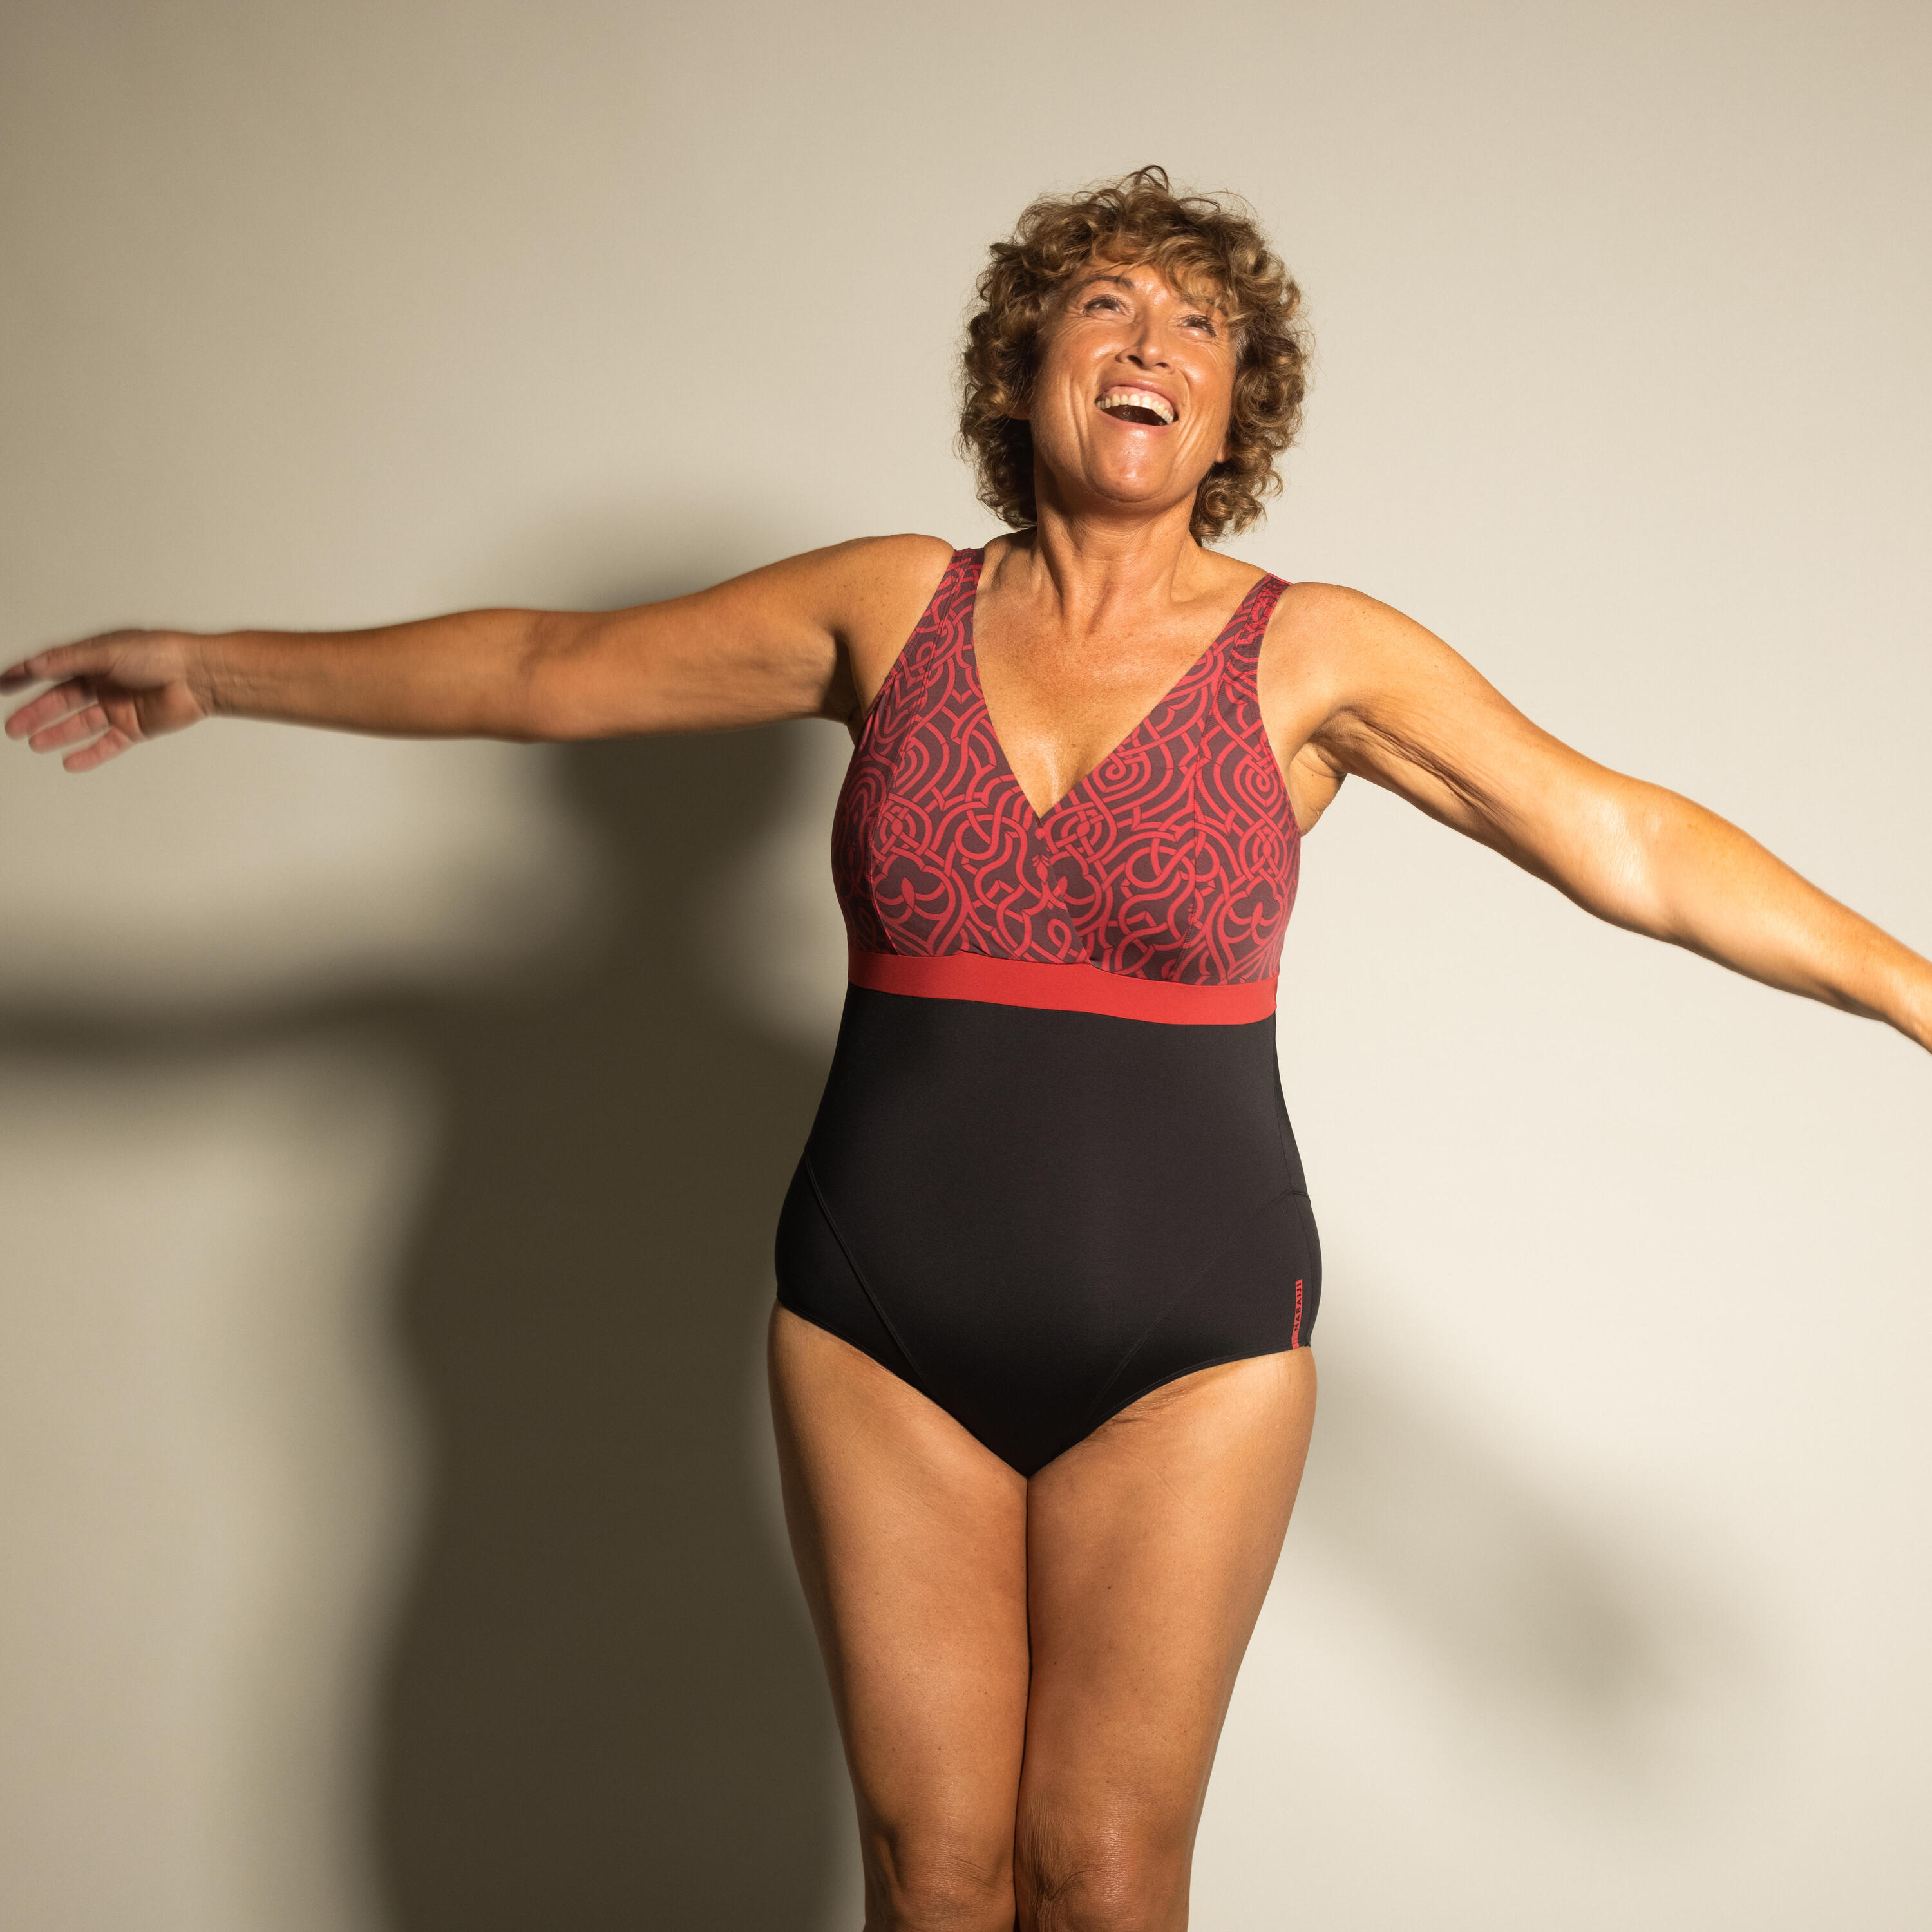 Women's 1-piece aquafitness swimsuit Cera black burgundy. Cup size D/E 9/17